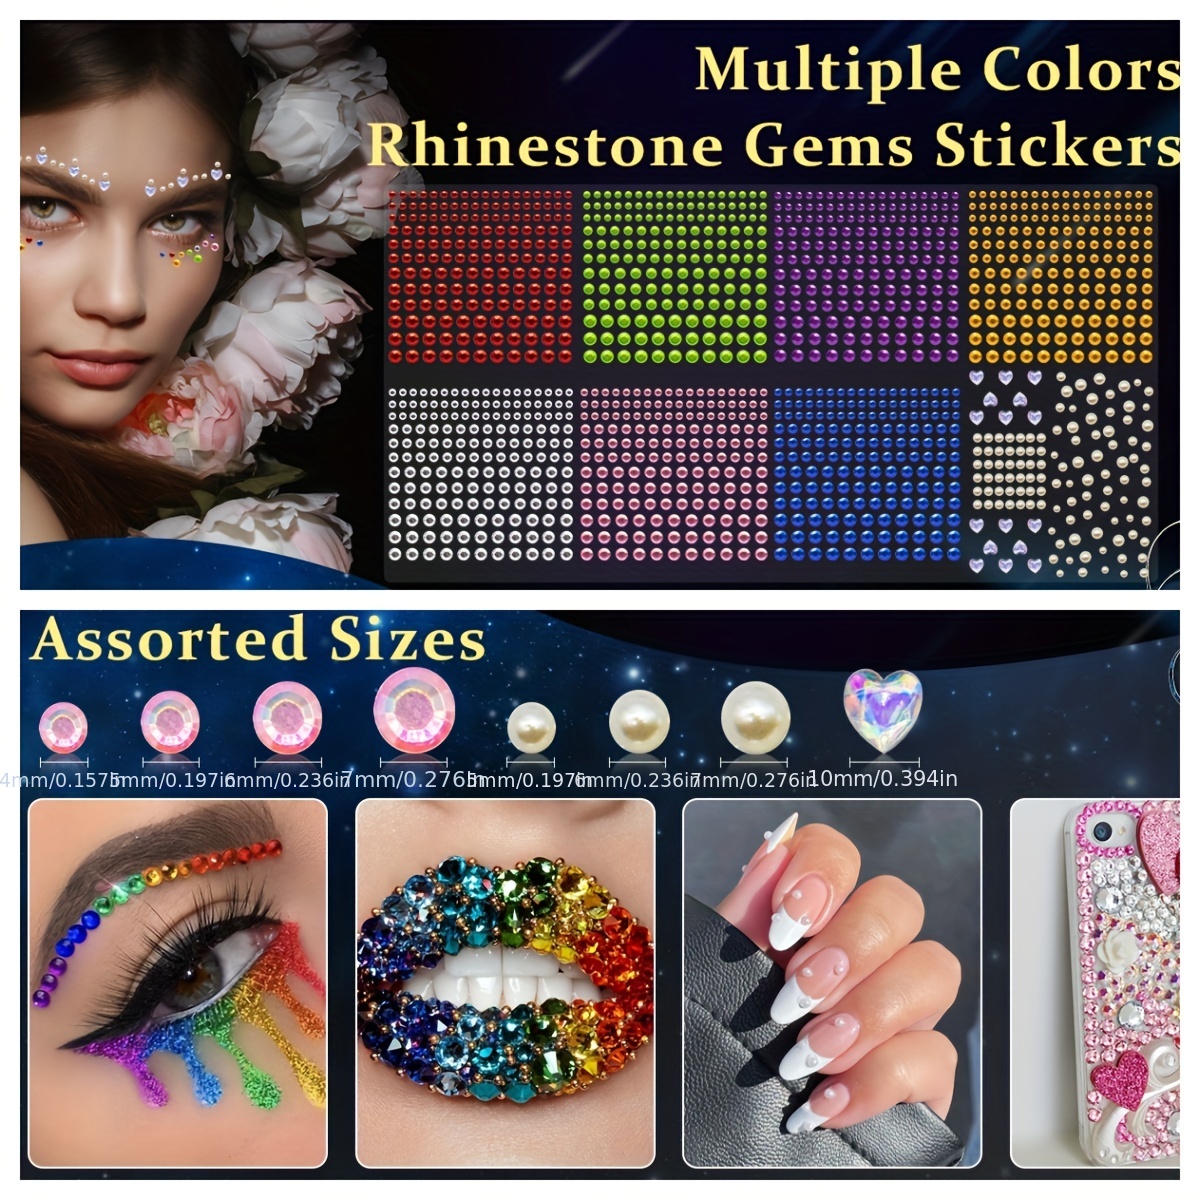 Face Gems,gem Stickers,rhinestone Stickers,jewel Stickers,self Adhesive  Rhinestone Stickers,jewel Stickers Self Adhesive,compatible Face Makeup